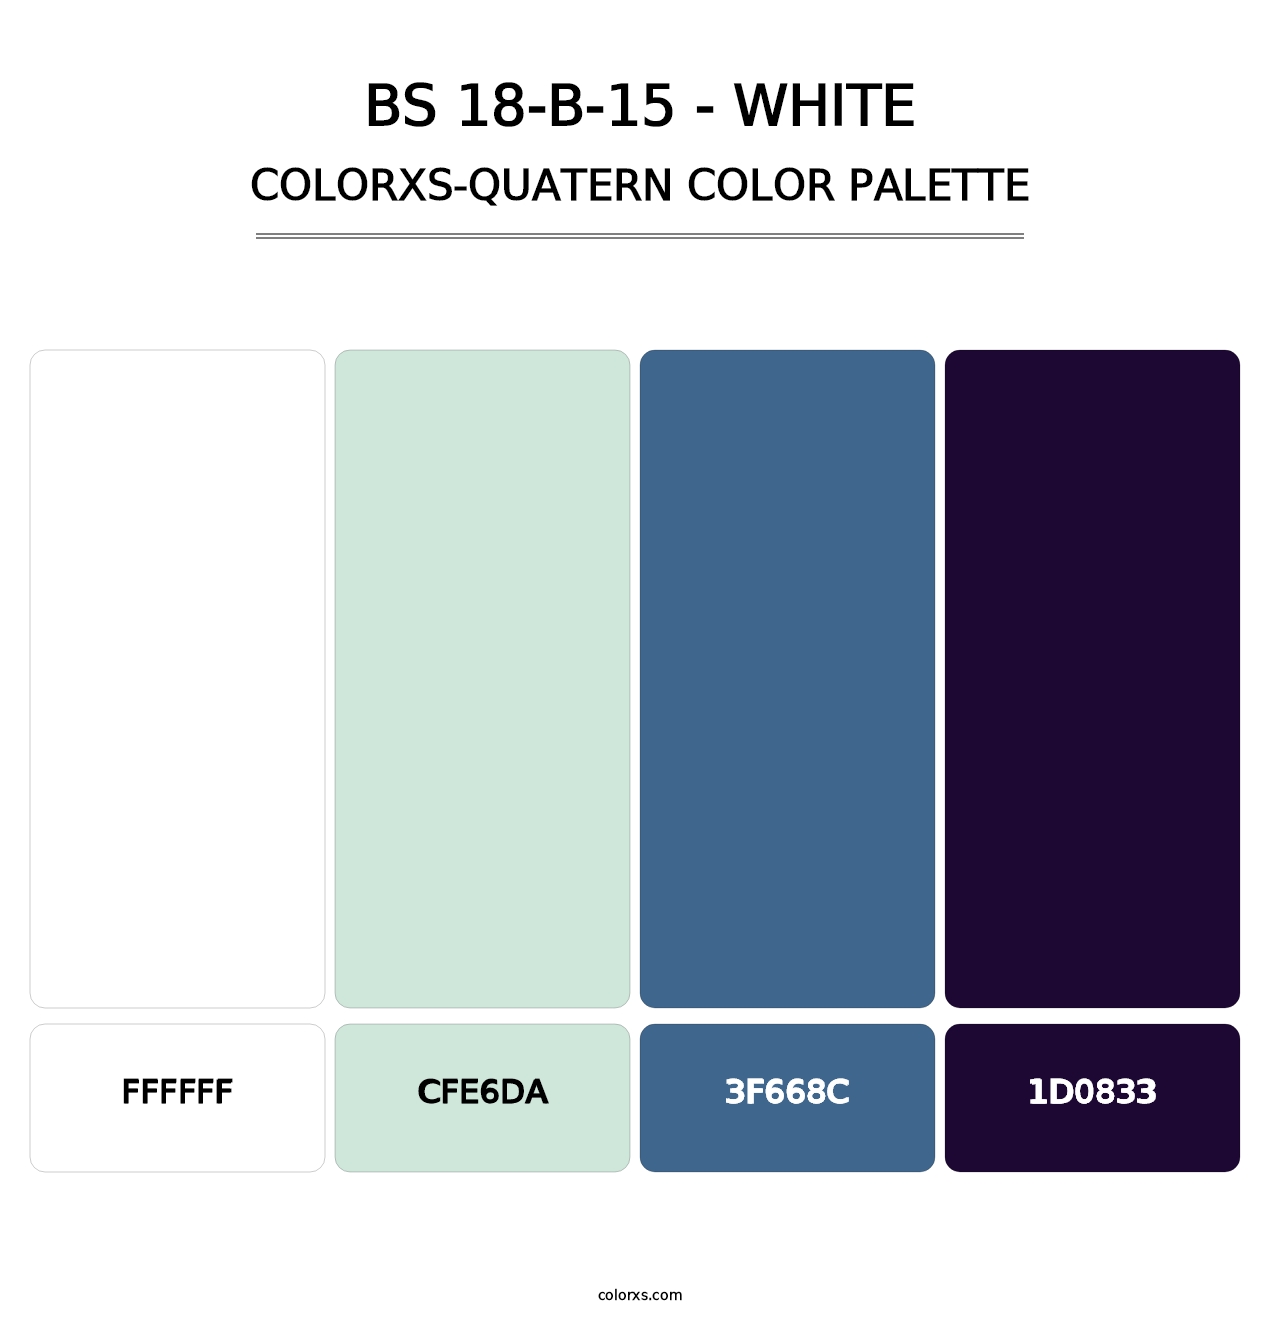 BS 18-B-15 - White - Colorxs Quatern Palette